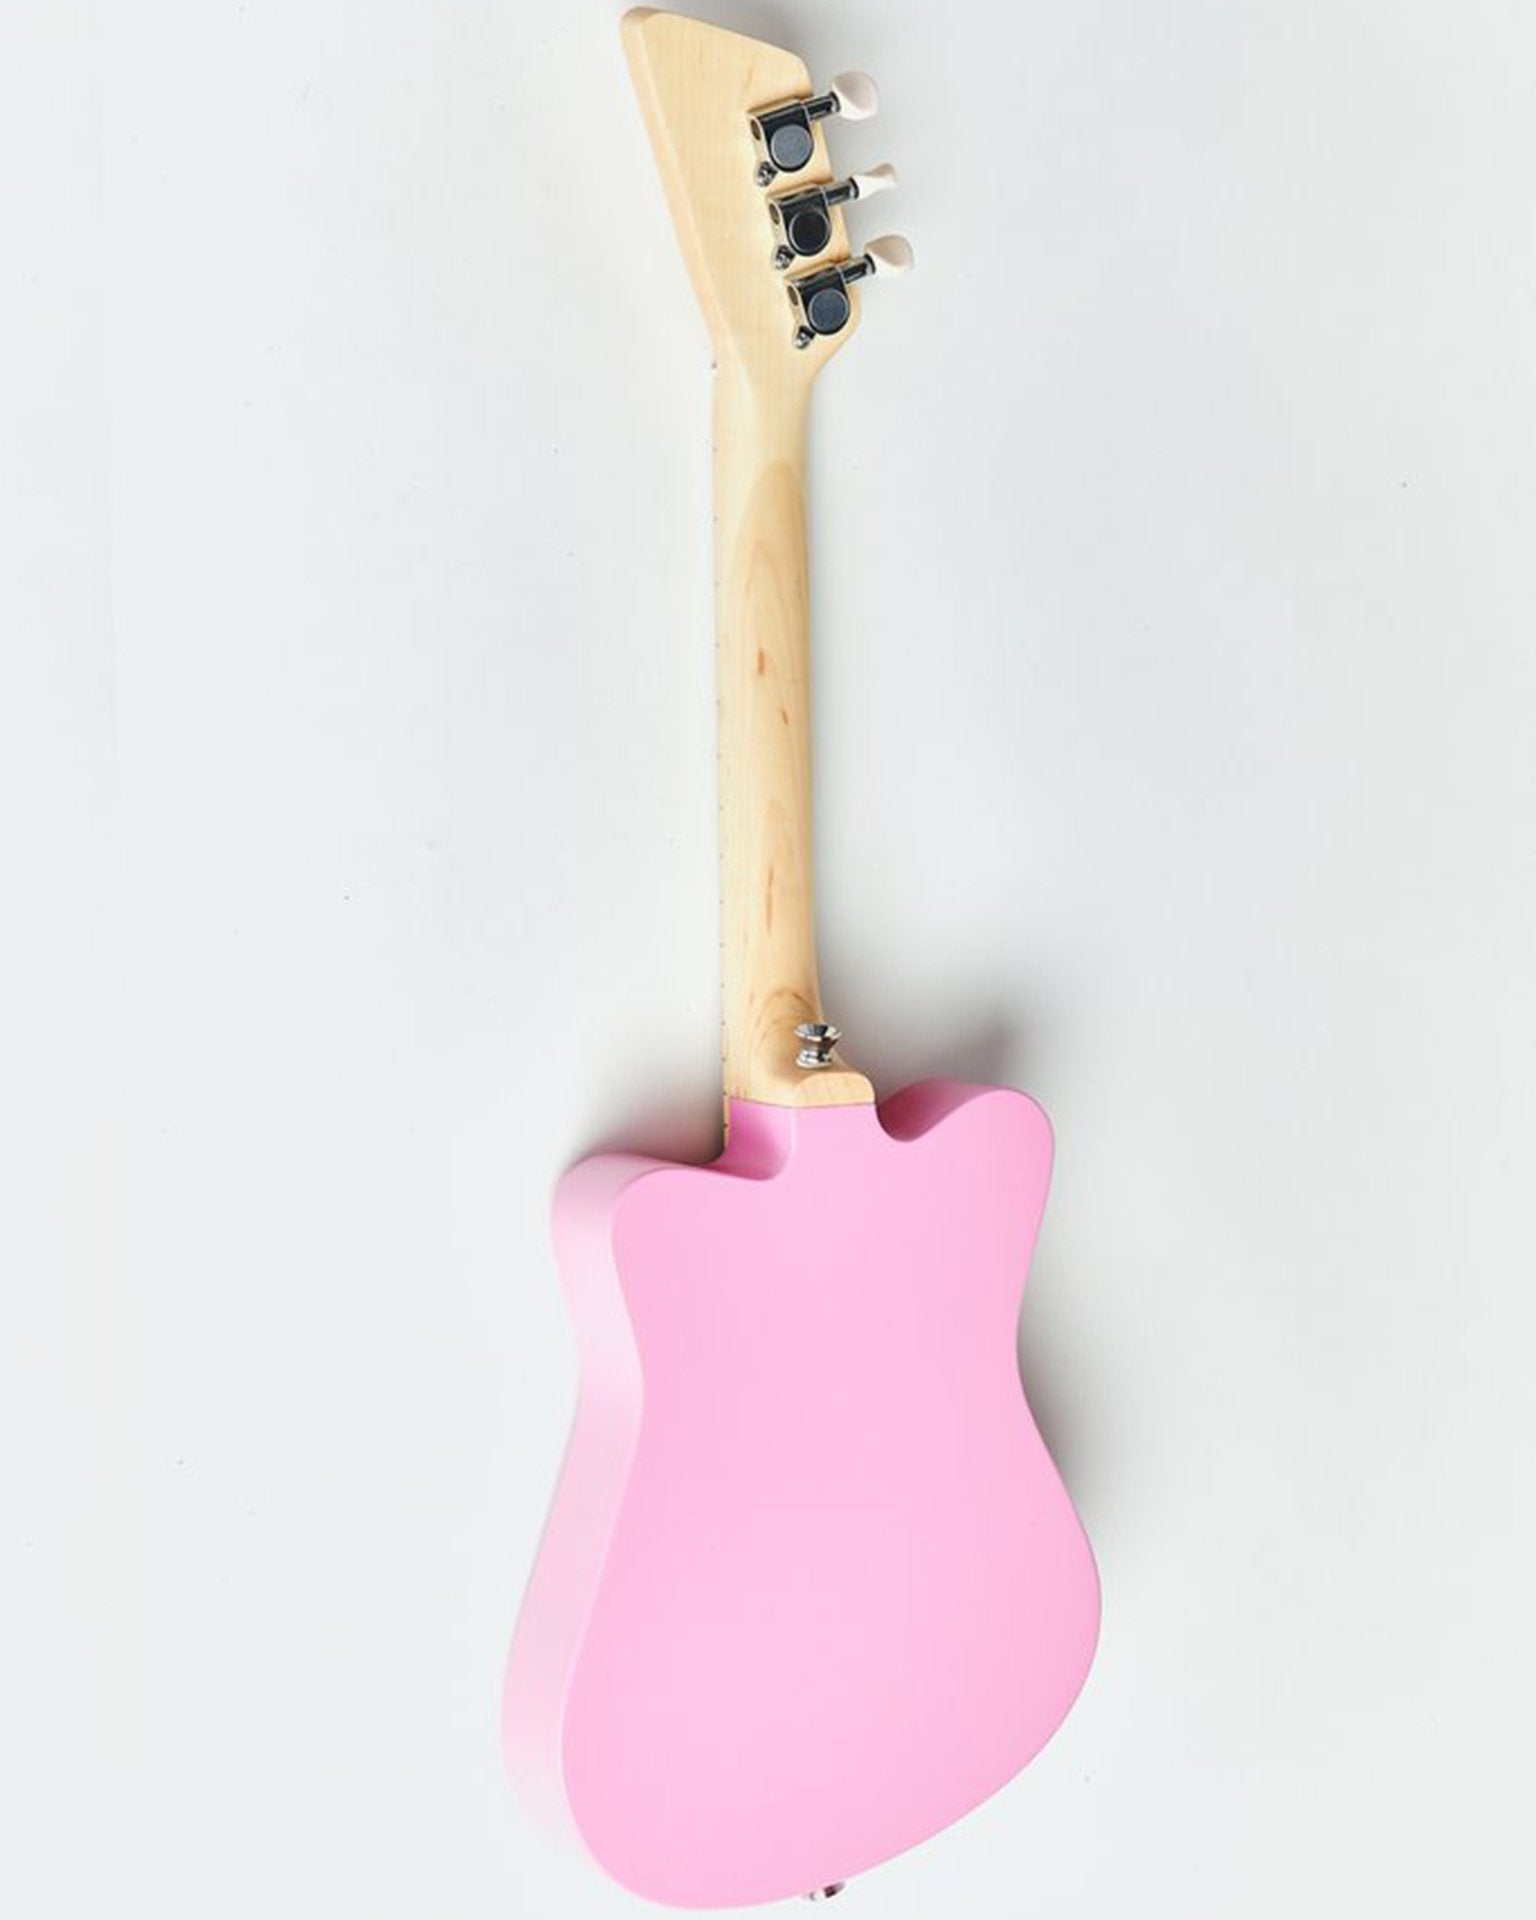 Little loog guitars play loog mini in pink